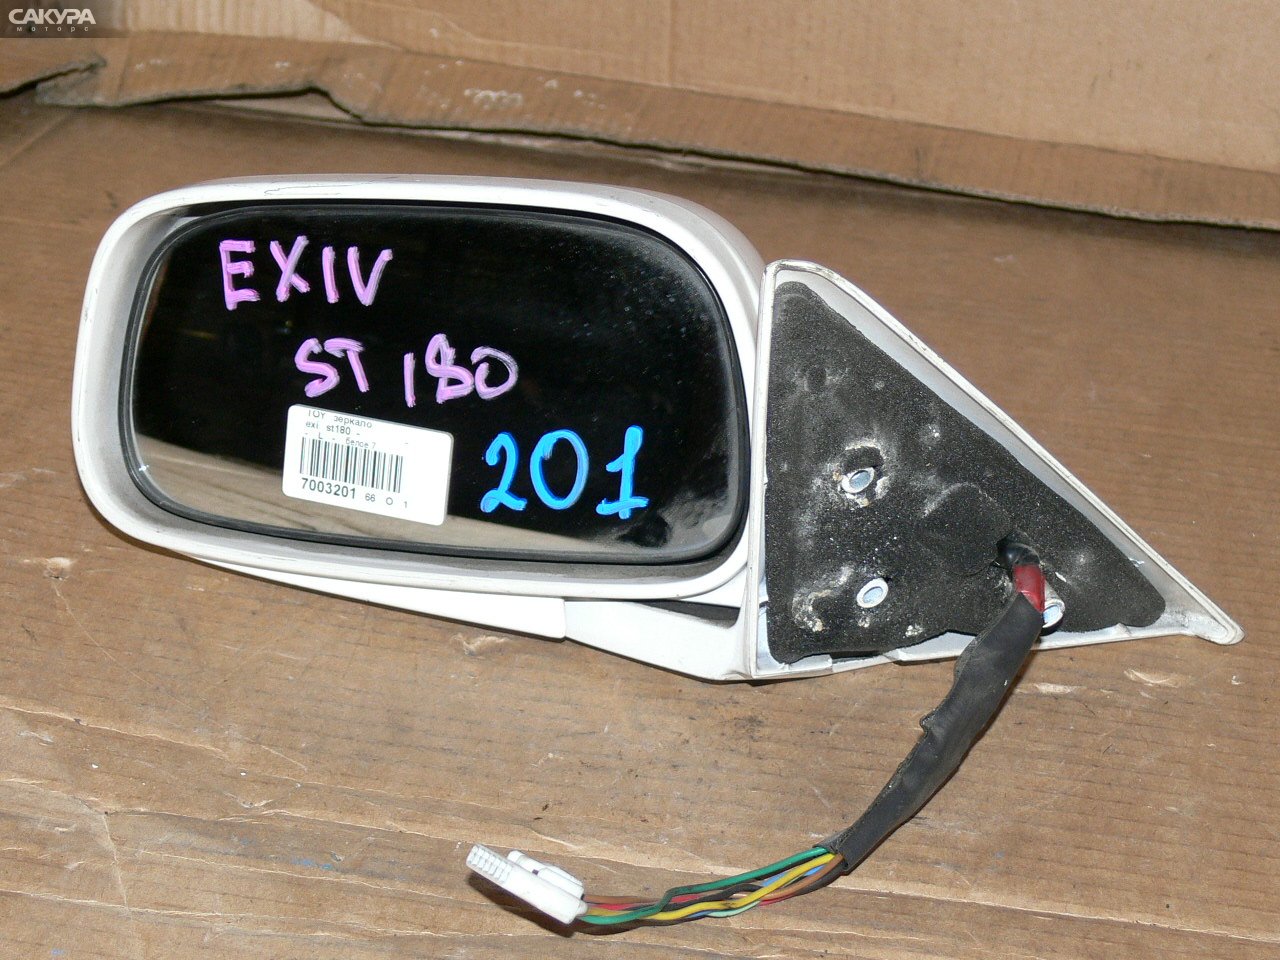 Зеркало боковое левое Toyota Corona Exiv ST180: купить в Сакура Иркутск.